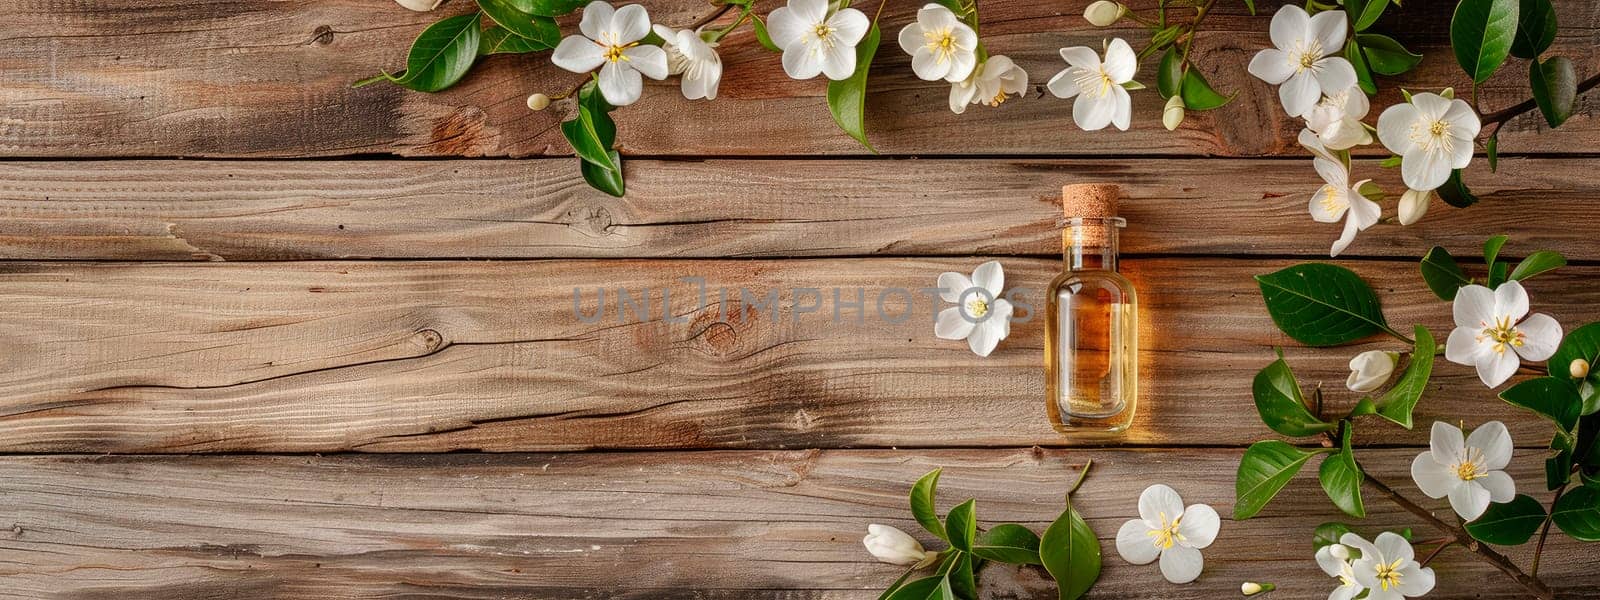 jasmine essential oil in a bottle. Selective focus. by yanadjana